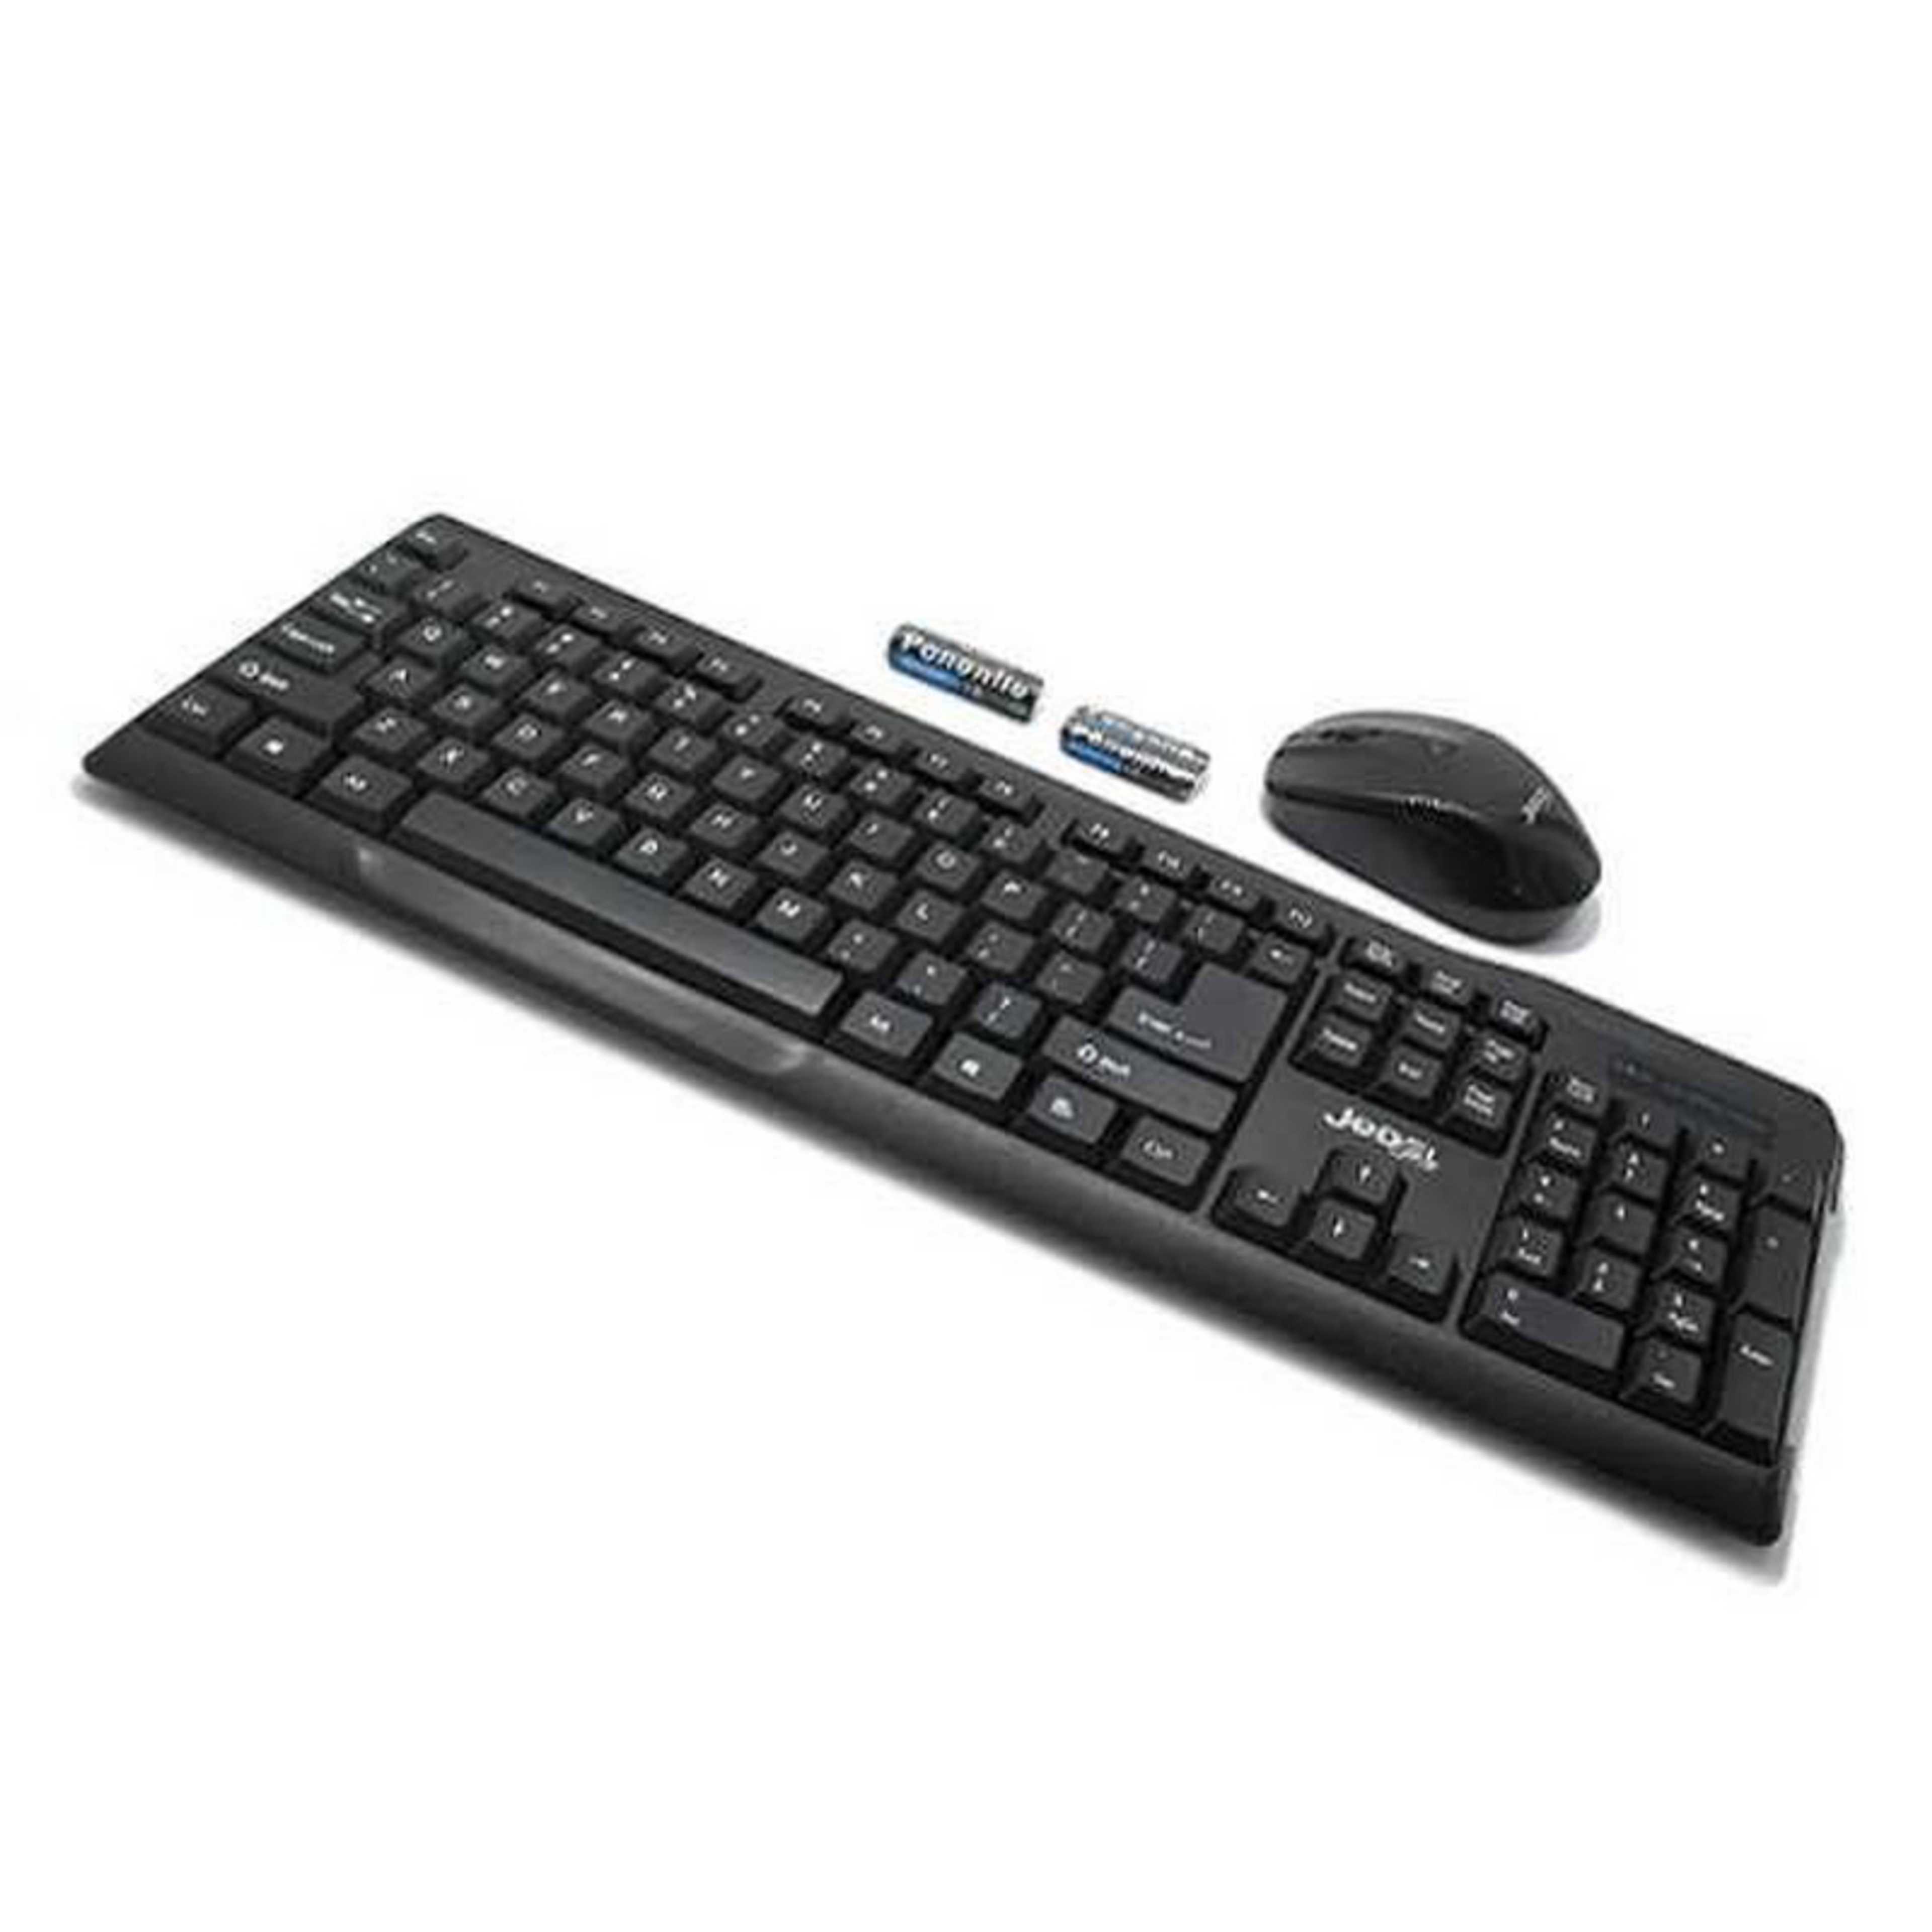 WS610 JEDEL 2.4GHz Ultrathin Wireless Desktop Keyboard And Mouse Combo